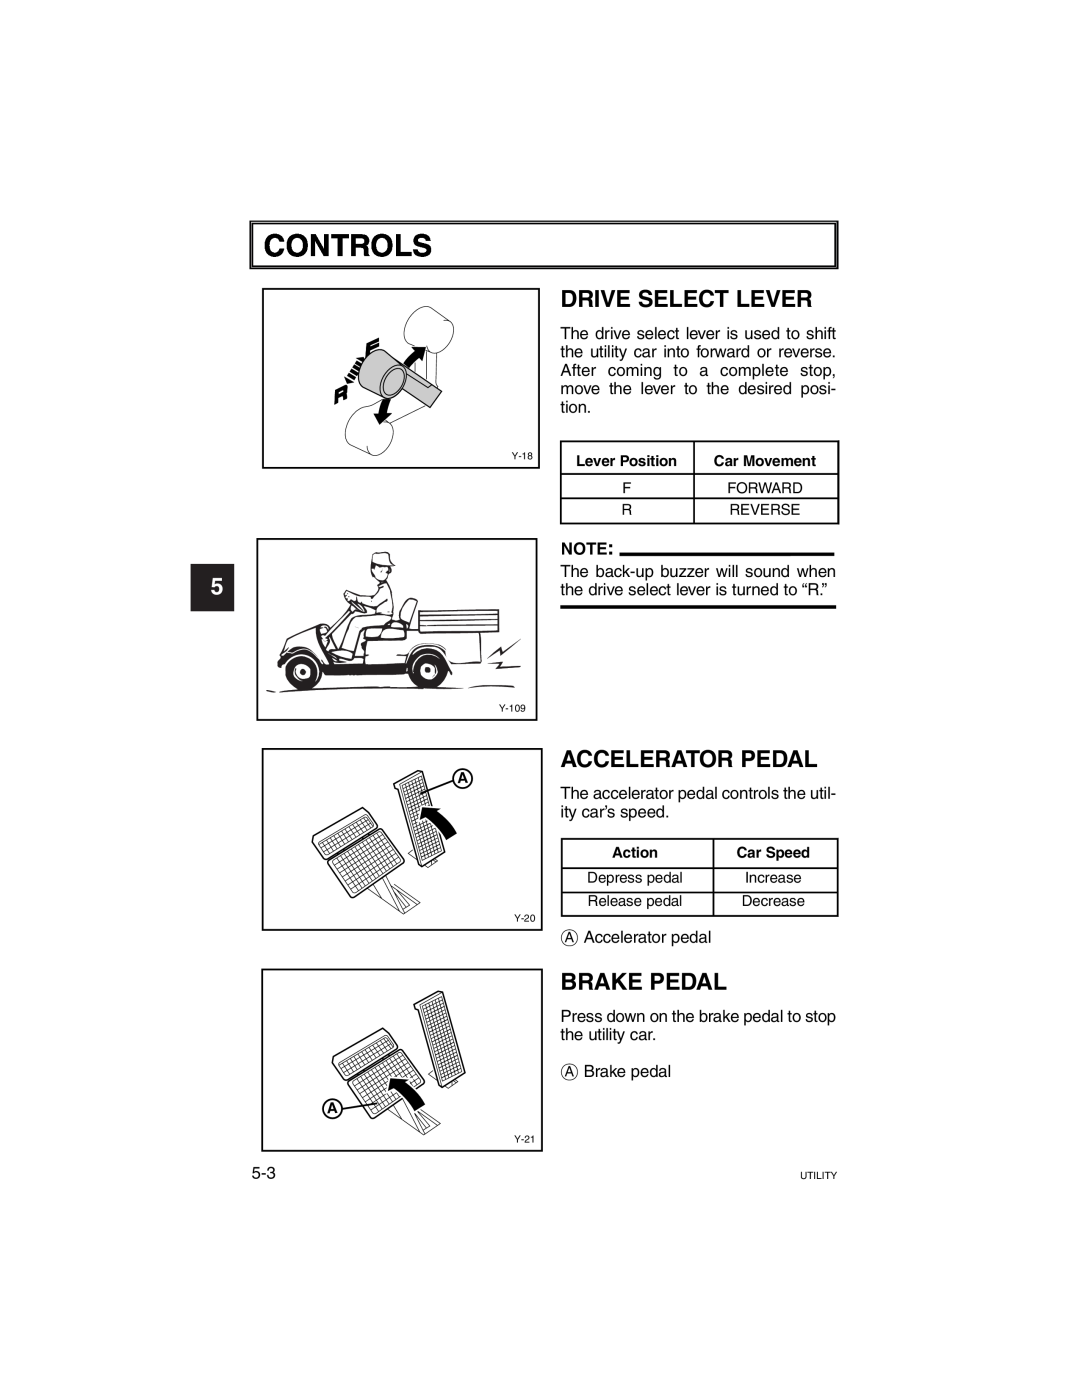 Yamaha G21A manual Controls, Drive Select Lever, Accelerator Pedal, Brake Pedal 